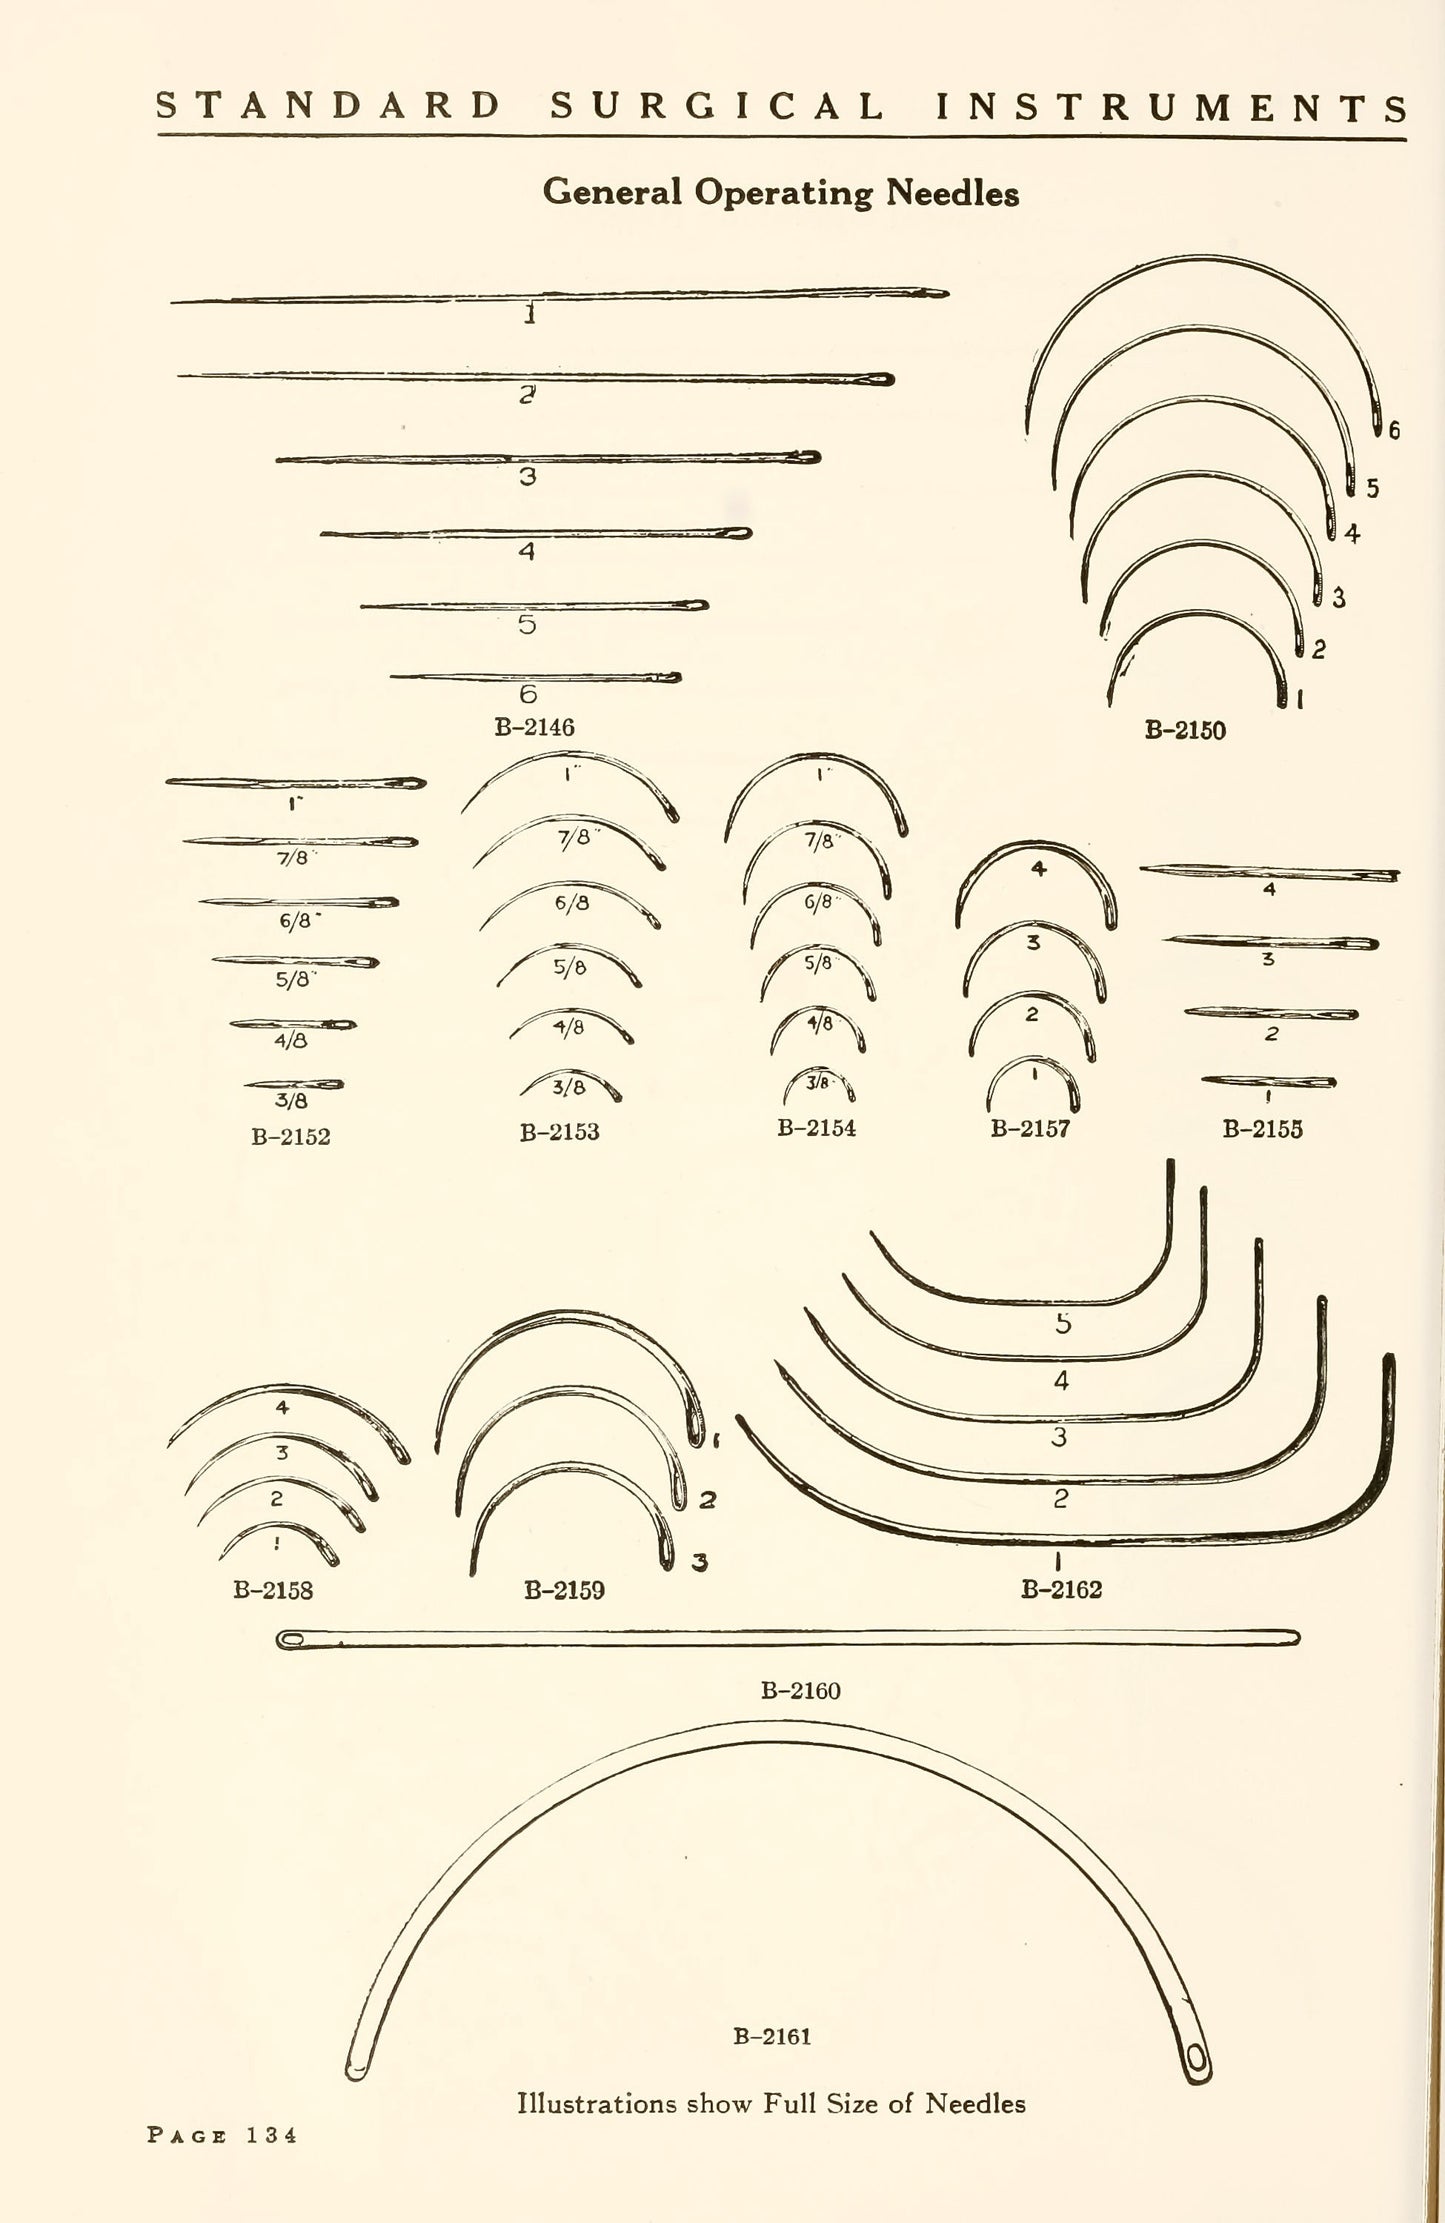 Surgical Instrument Catalogue Pages Set 1 [130 Images]